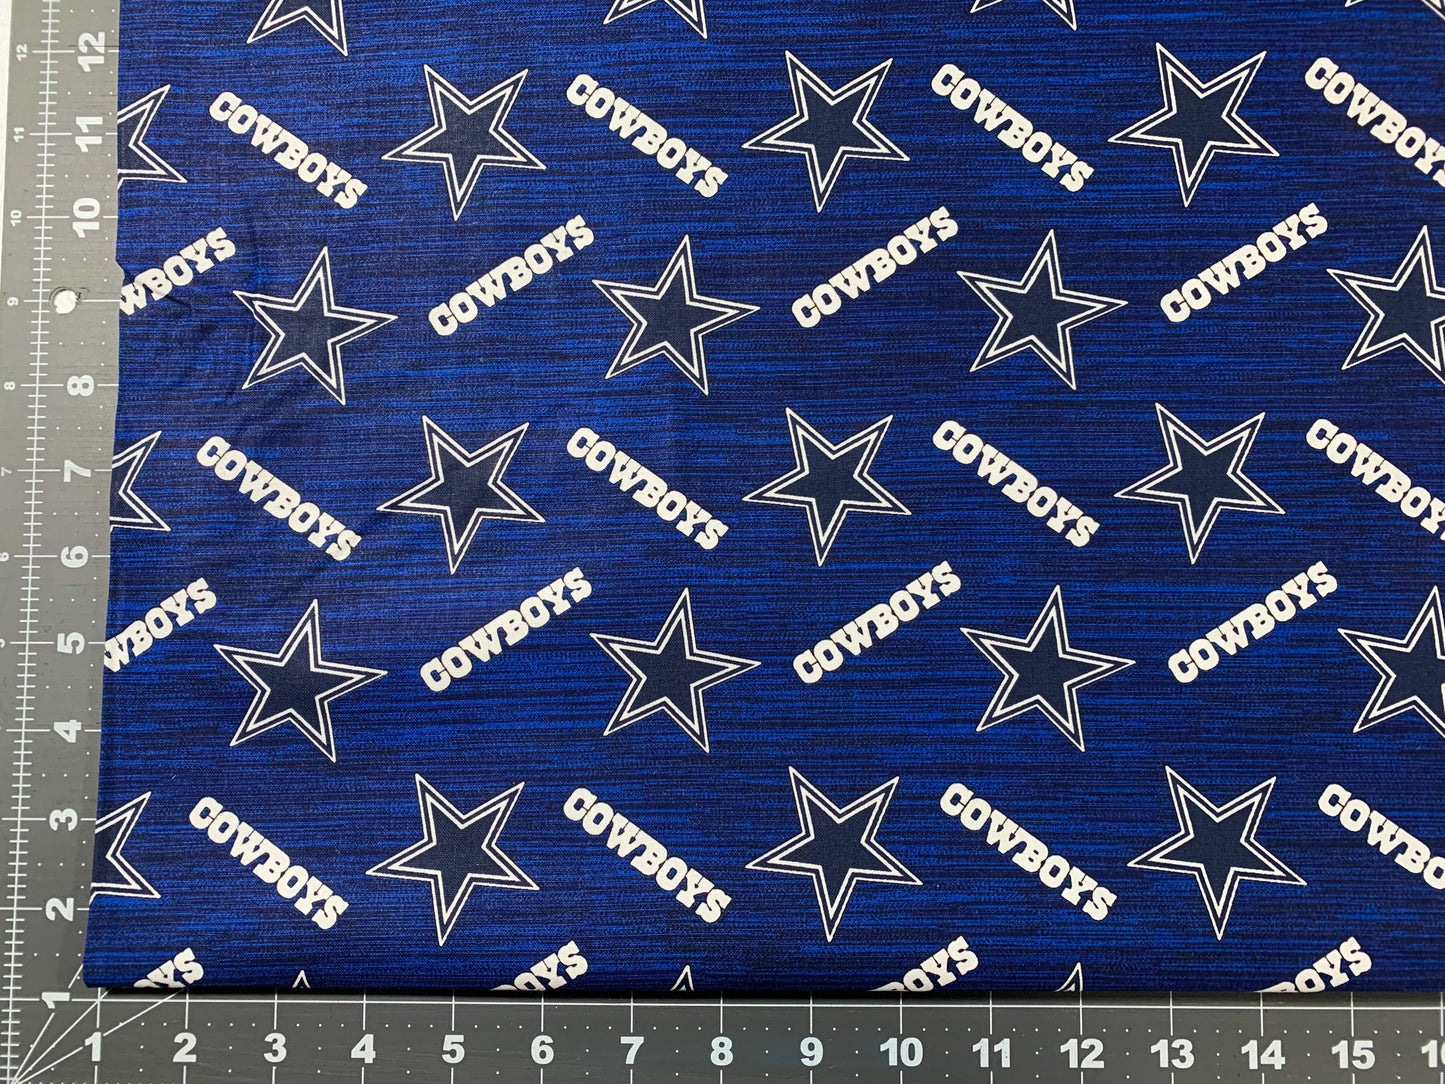 Dallas Cowboys fabric 22088 NFL cotton Fabric Heather